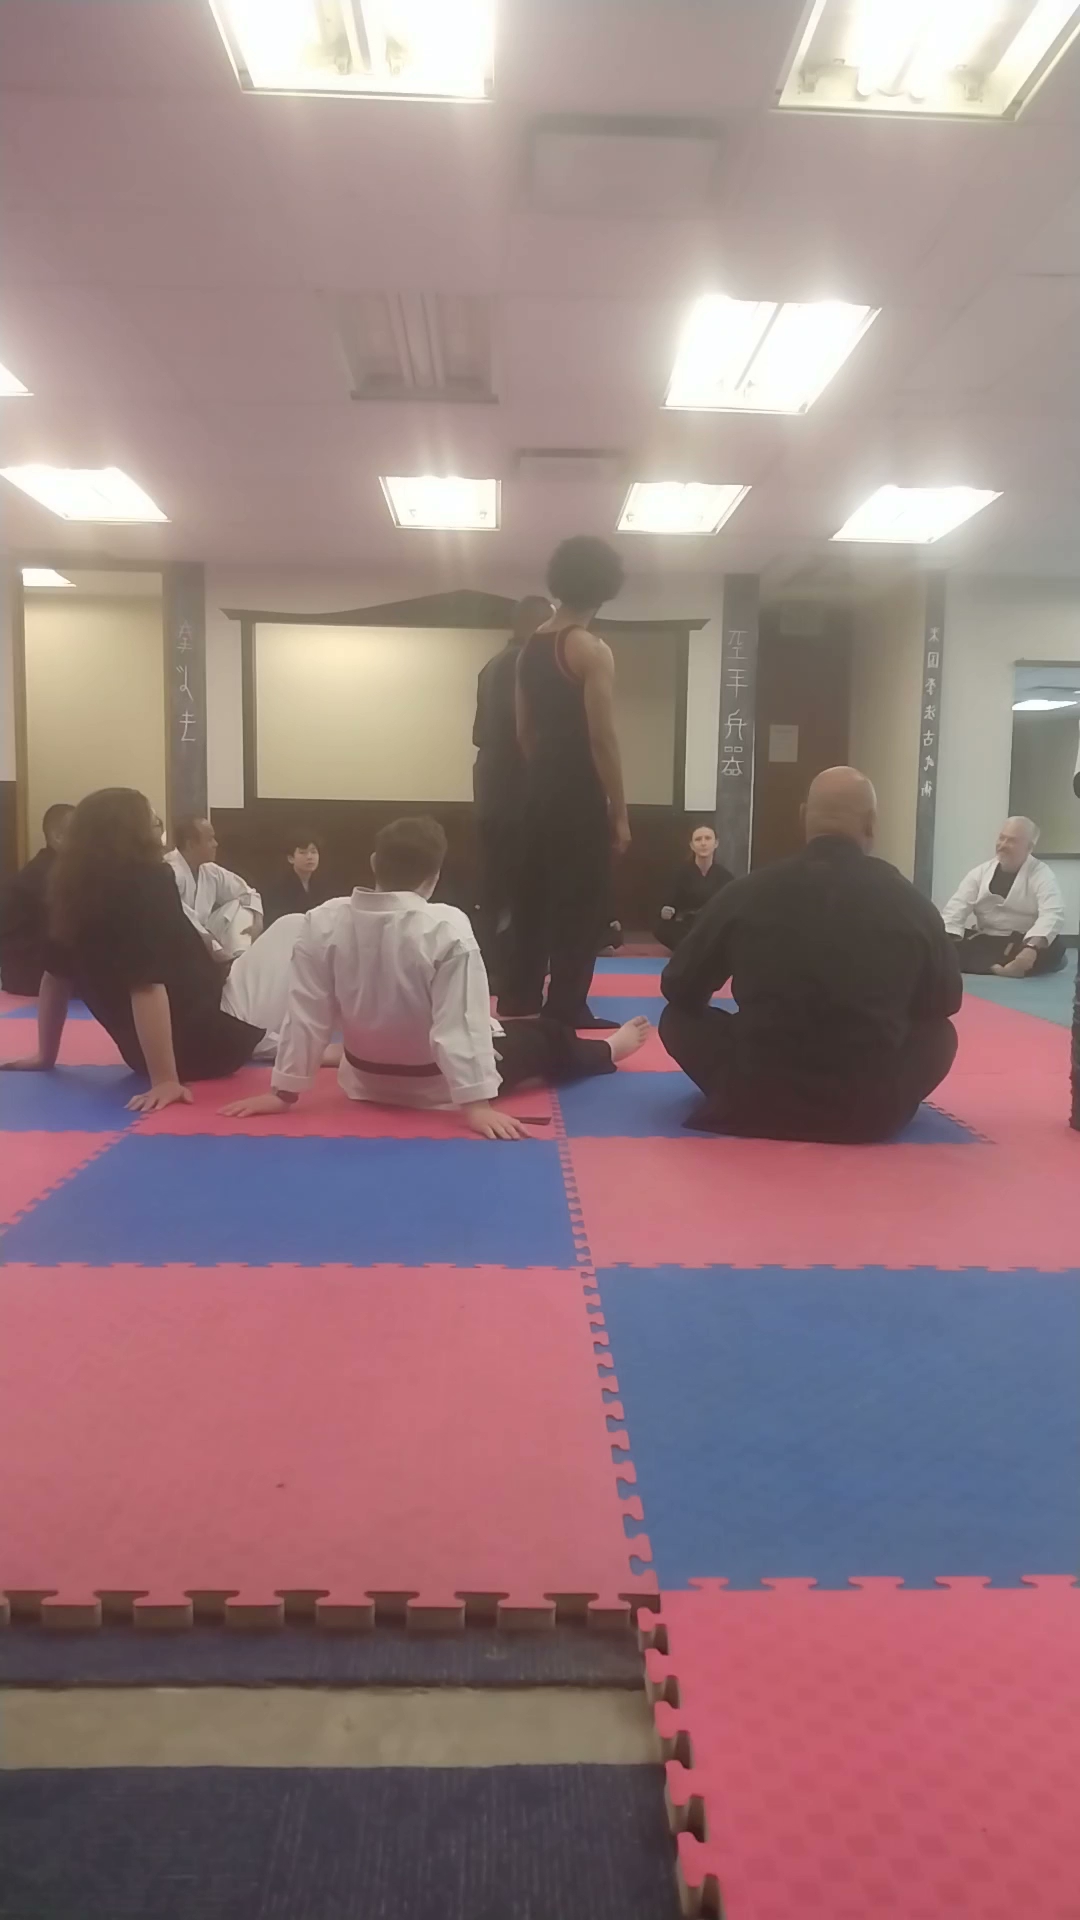 Shogun Martial Arts Center International Inc.